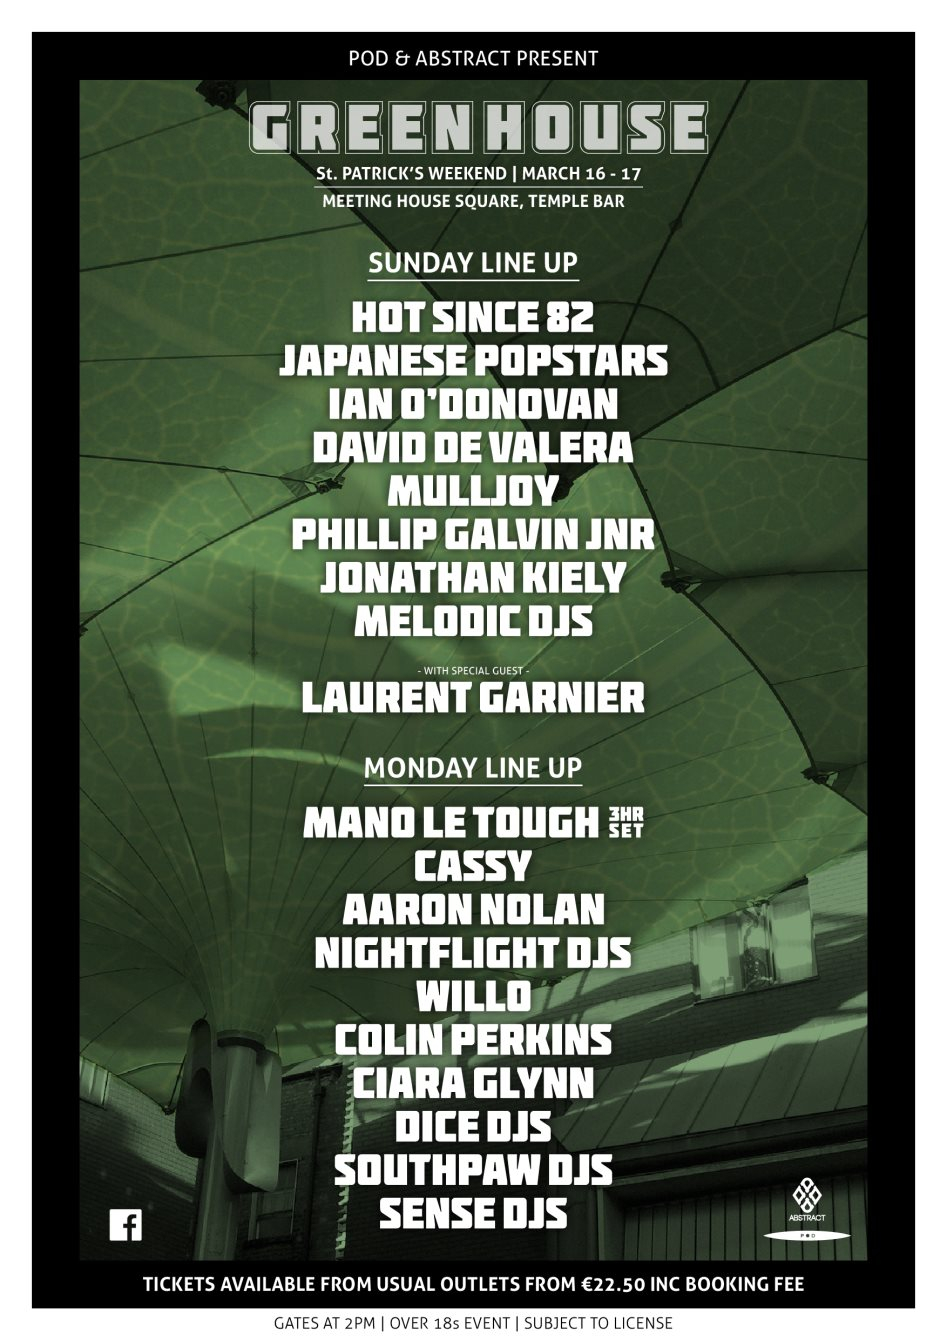 Laurent Garnier, The Japanese Popstars, Ian O'donovan - Greenhouse - Flyer front